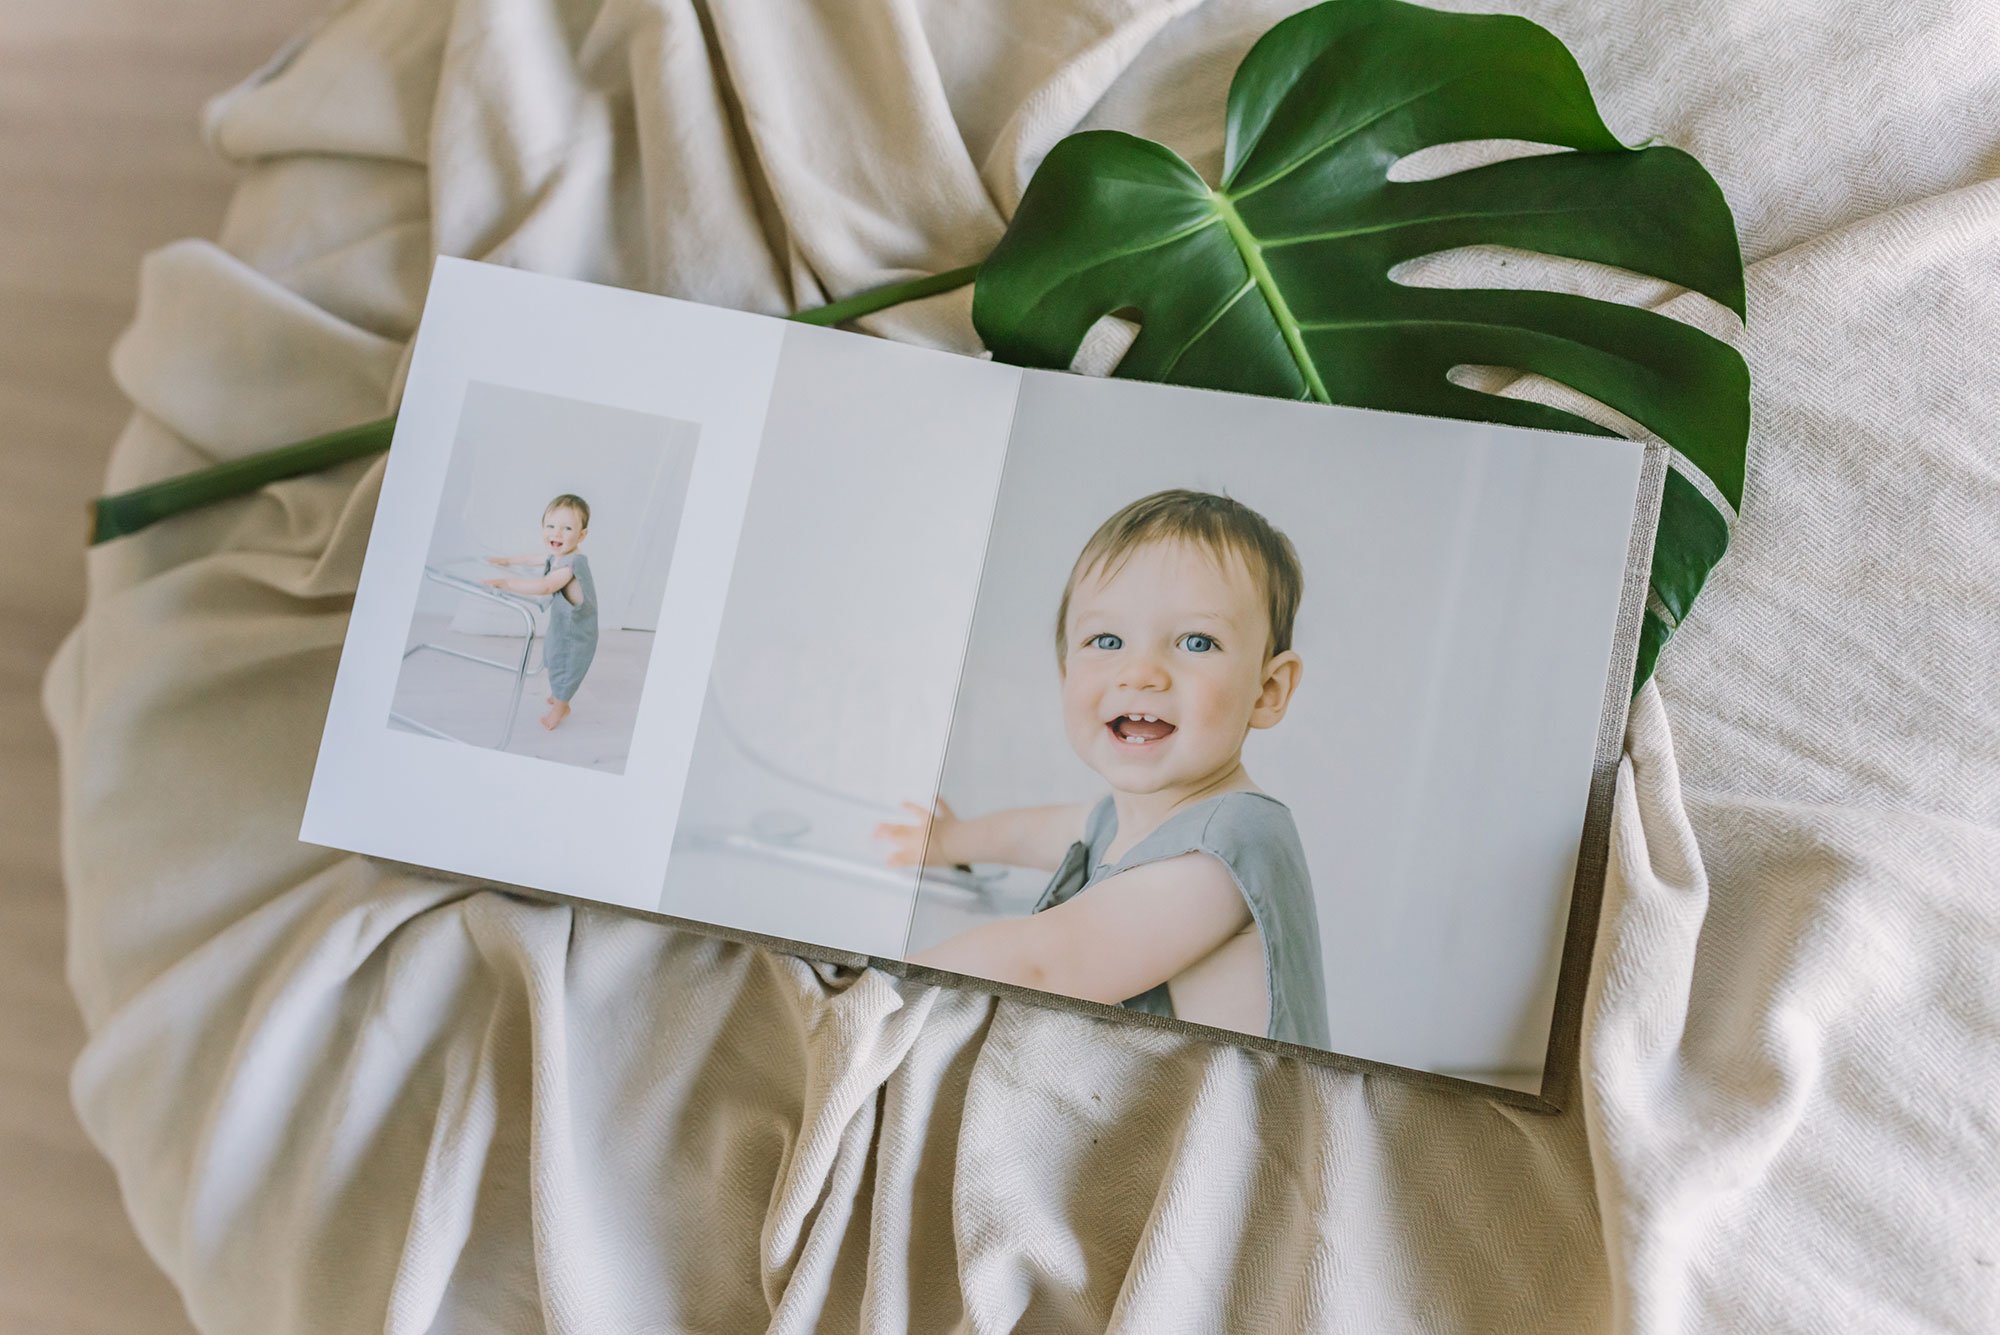 Niagara baby and family heirloom album of baby portraits